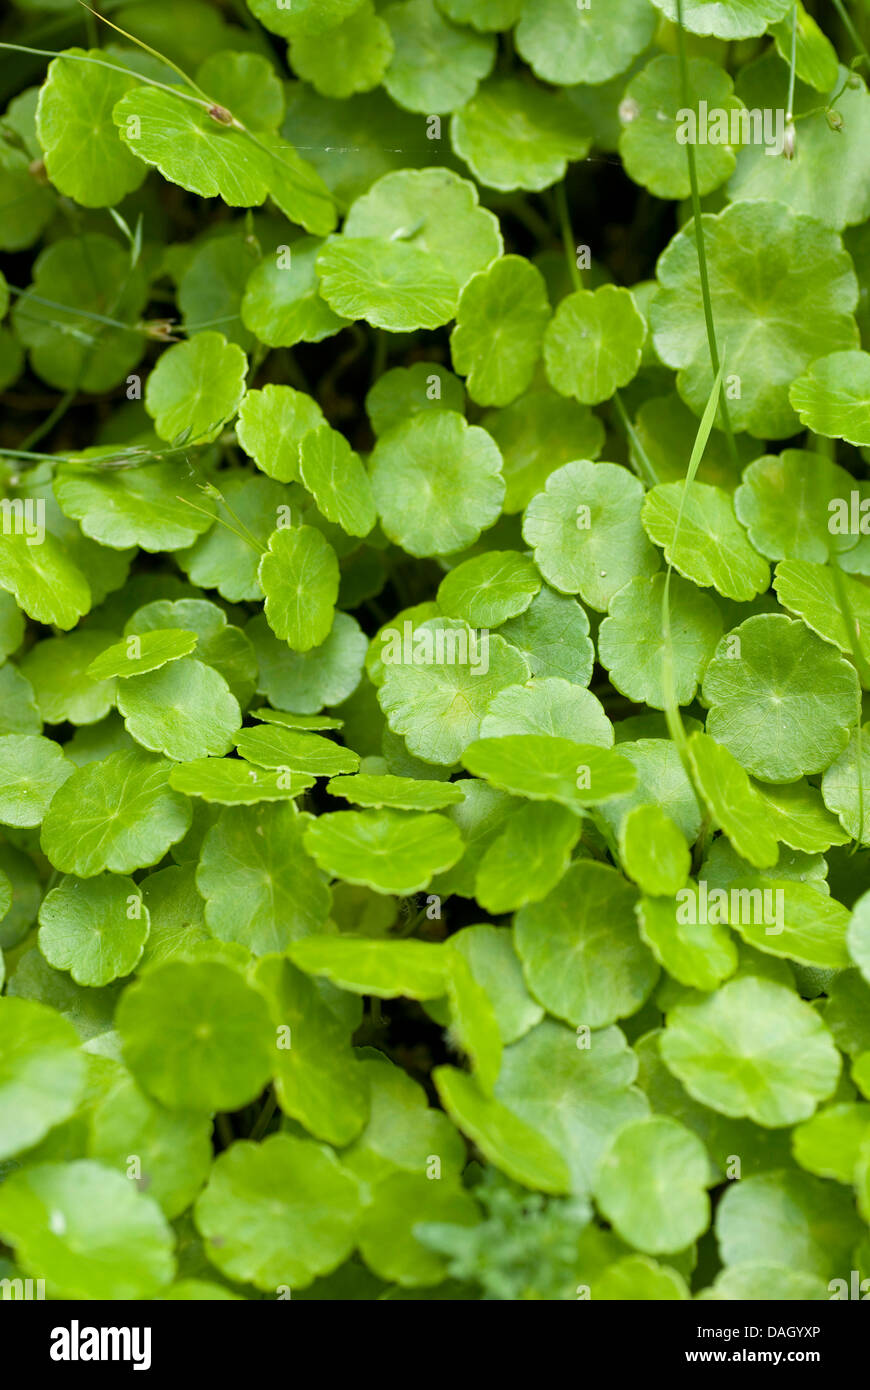 marsh pennywort, common pennywort (Hydrocotyle vulgaris), leaves, Germany Stock Photo